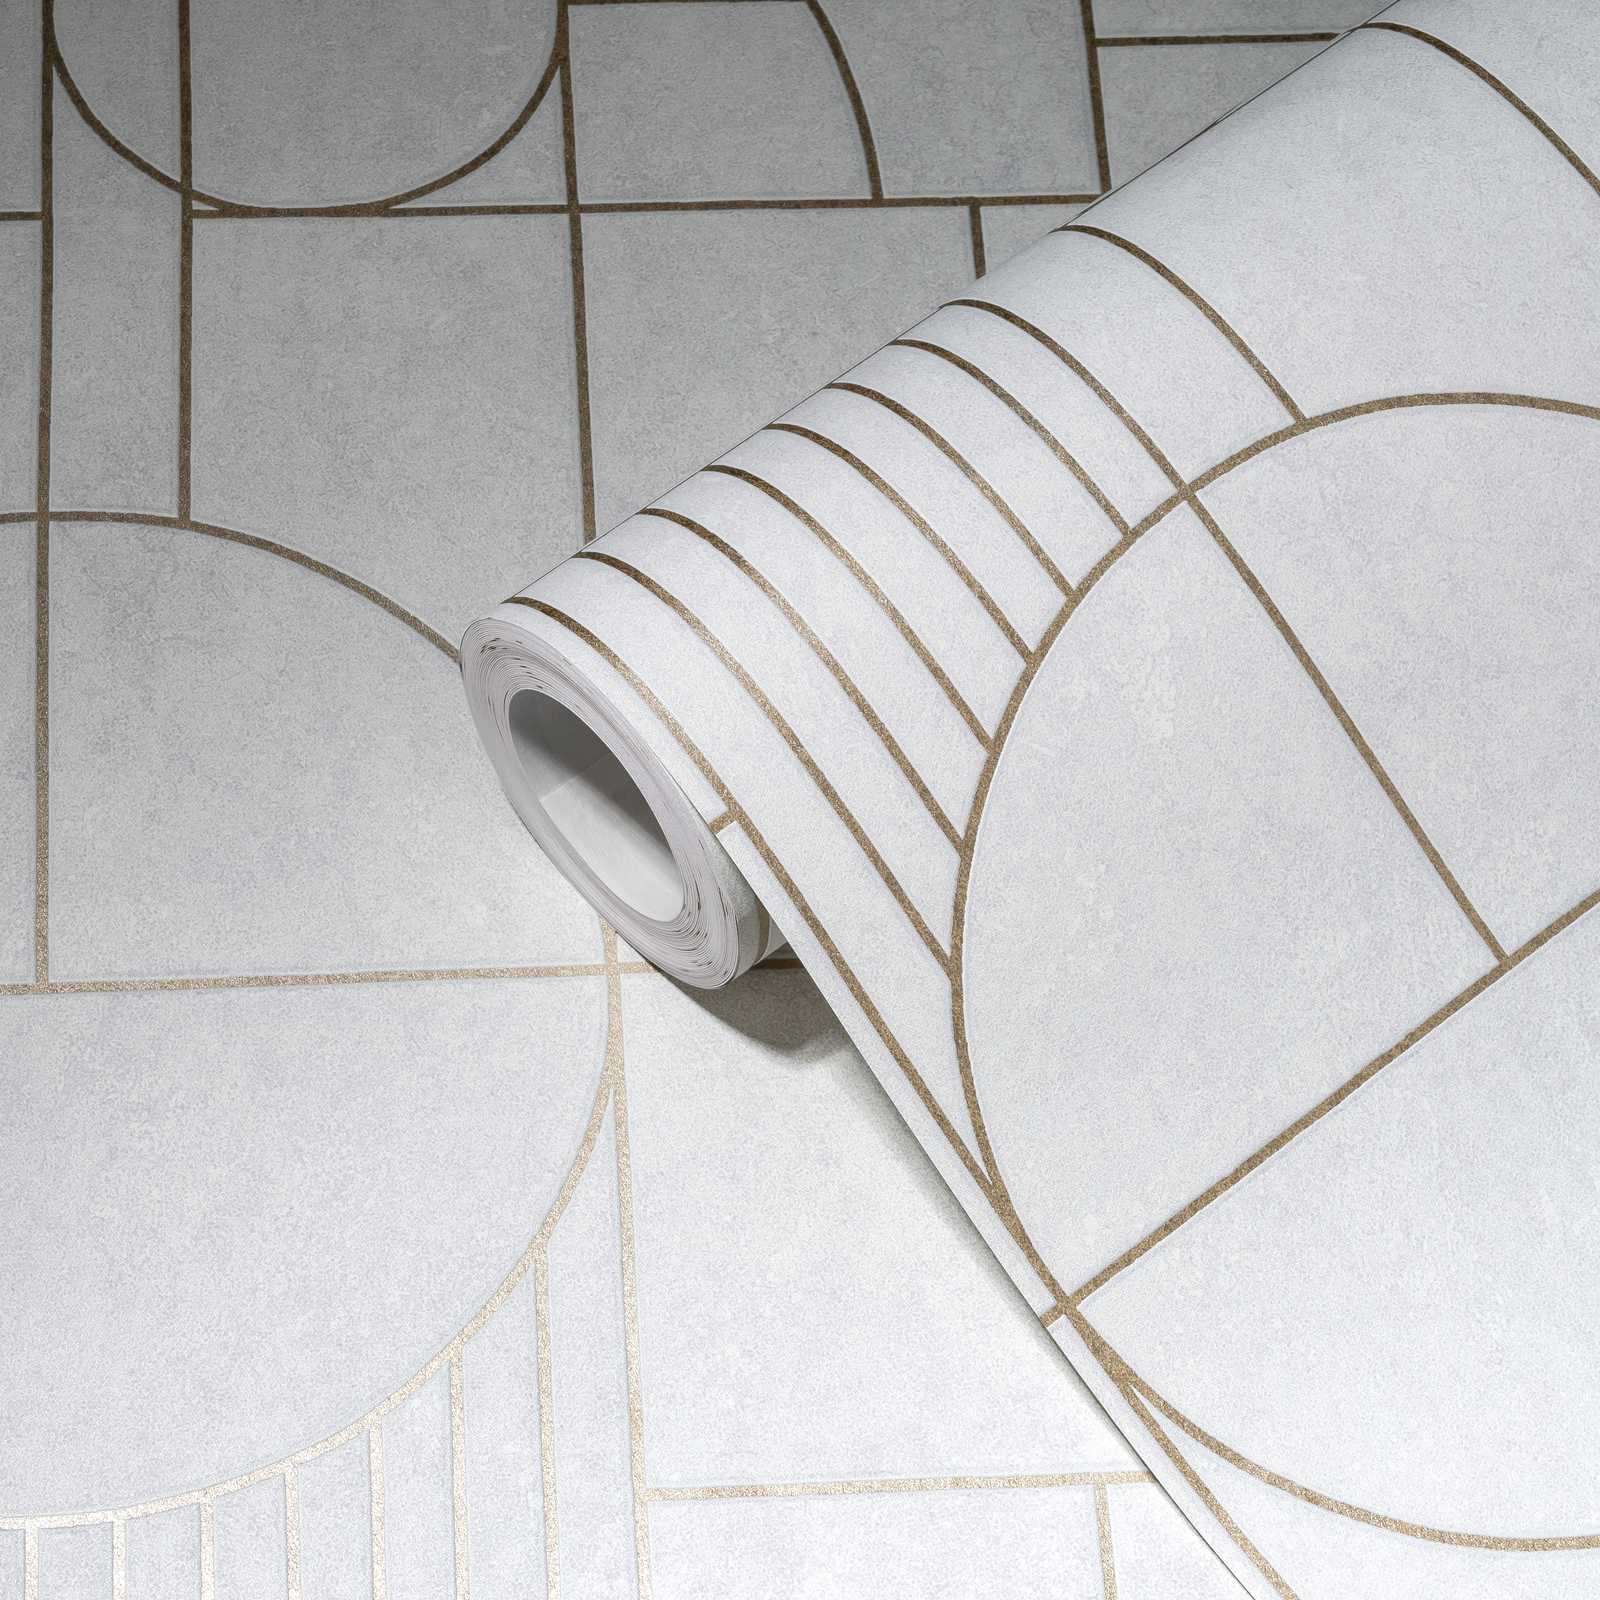             Fliesenoptik Tapete Art Deco Design marmoriert – Metallic, Weiß
        